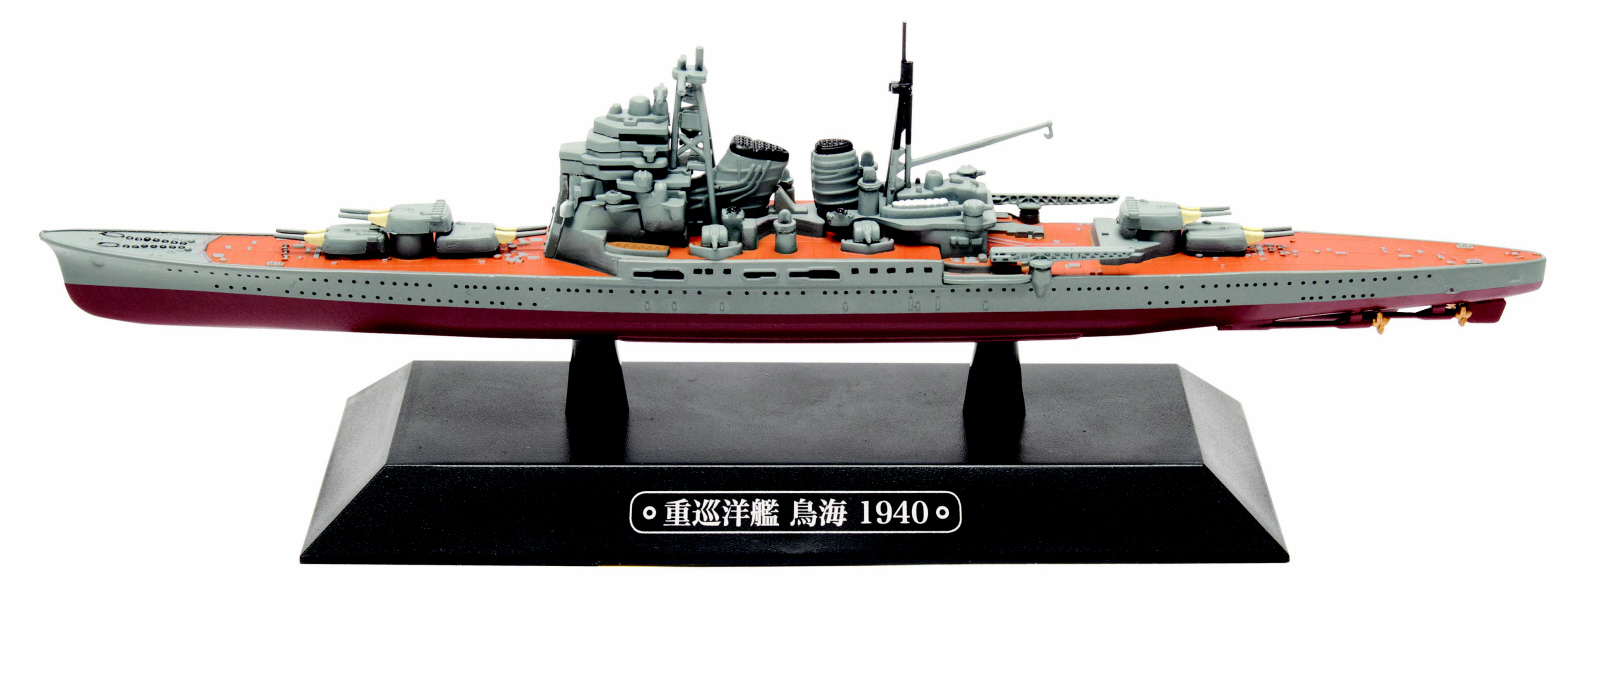 EMGC11 – IJN Heavy Cruiser Chokai – 1940 1:1100 SCALE